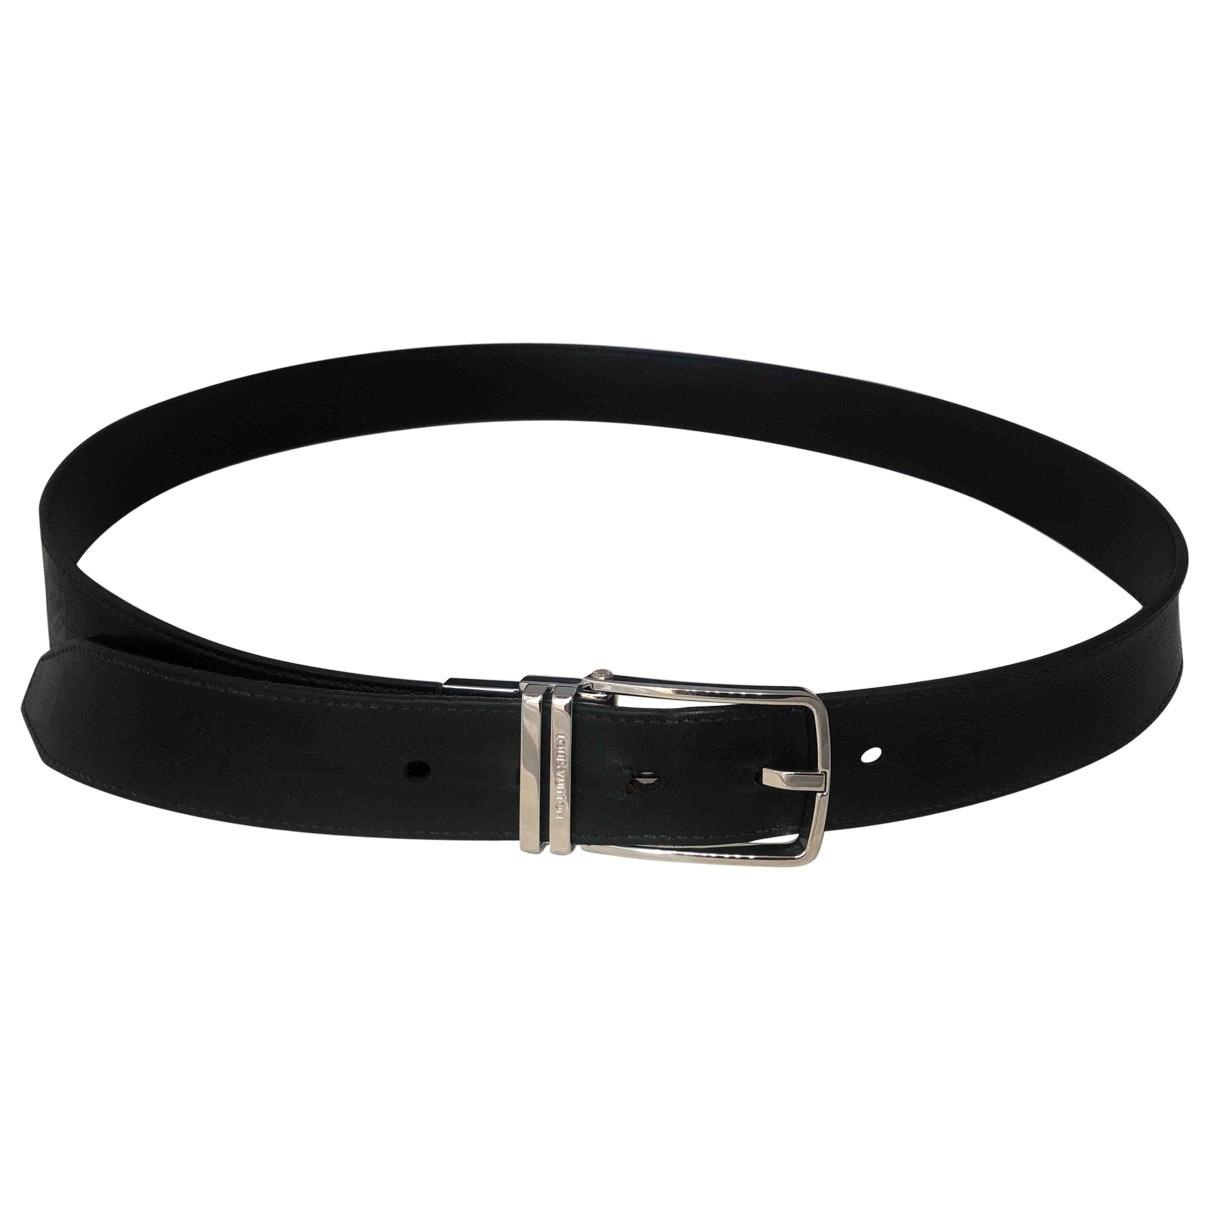 Louis Vuitton Citizen Leather Belt in Black for Men - Lyst